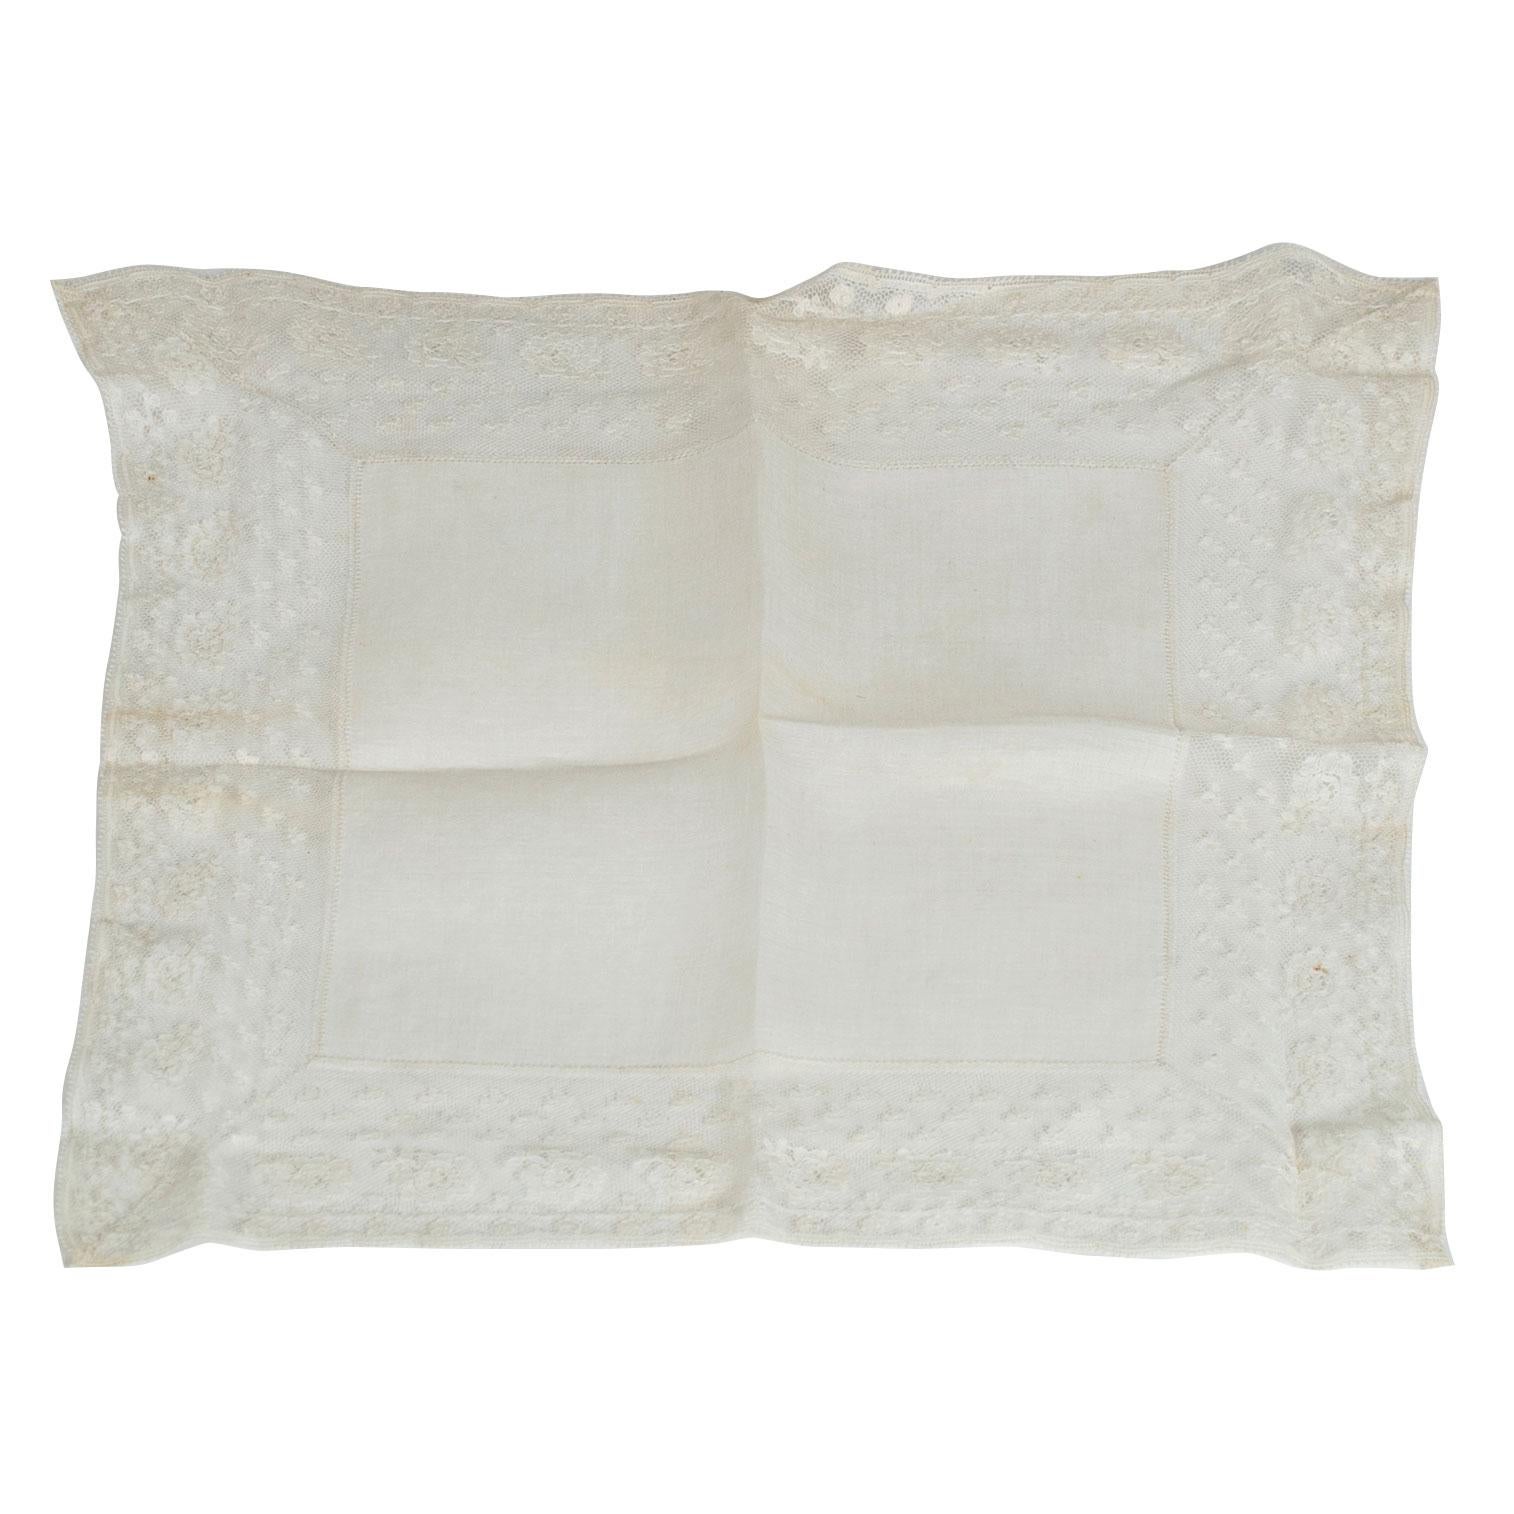 New de Guise French Lace and Linen Handkerchief – Original box, 1953